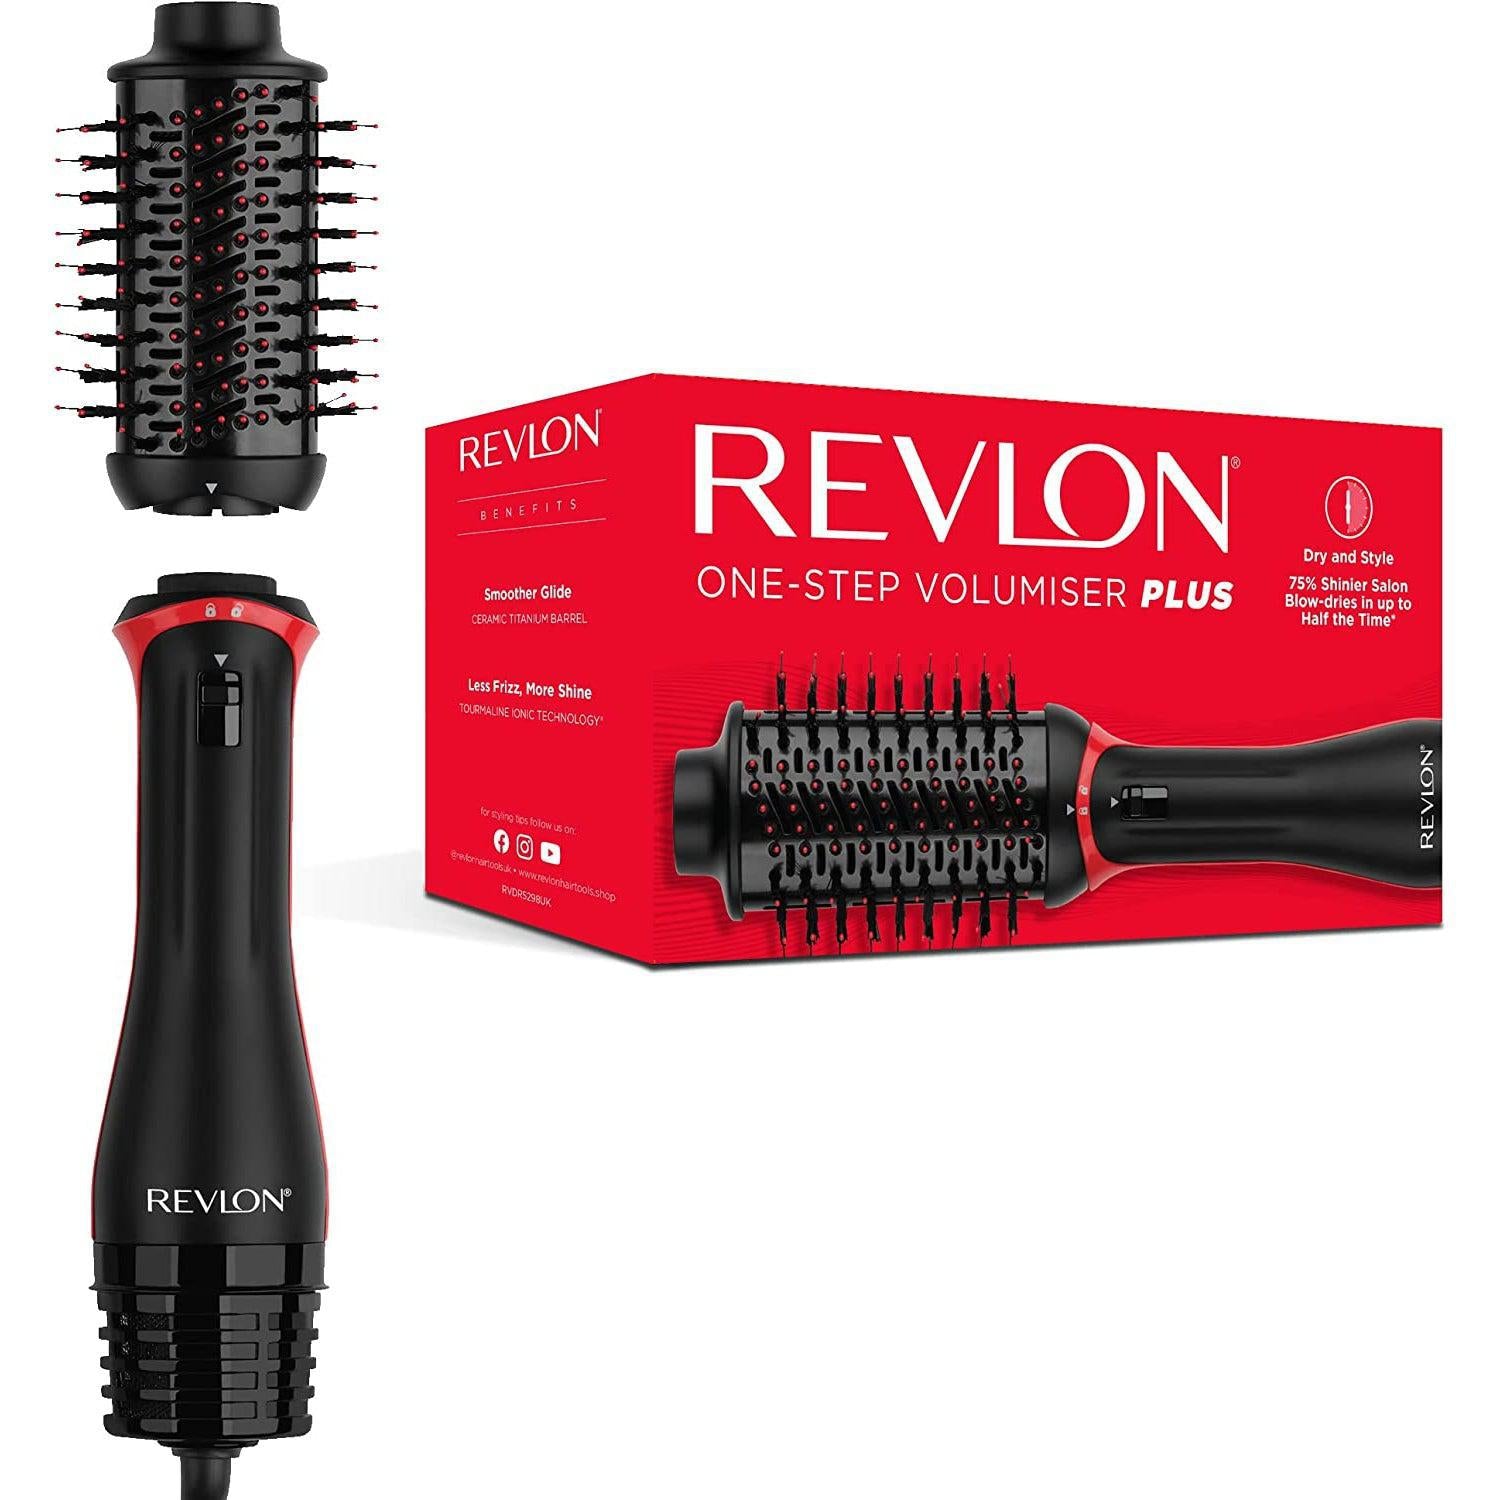 Revlon One-Step Volumiser Plus with Detachable Head - RVDR5298UK - Healthxpress.ie